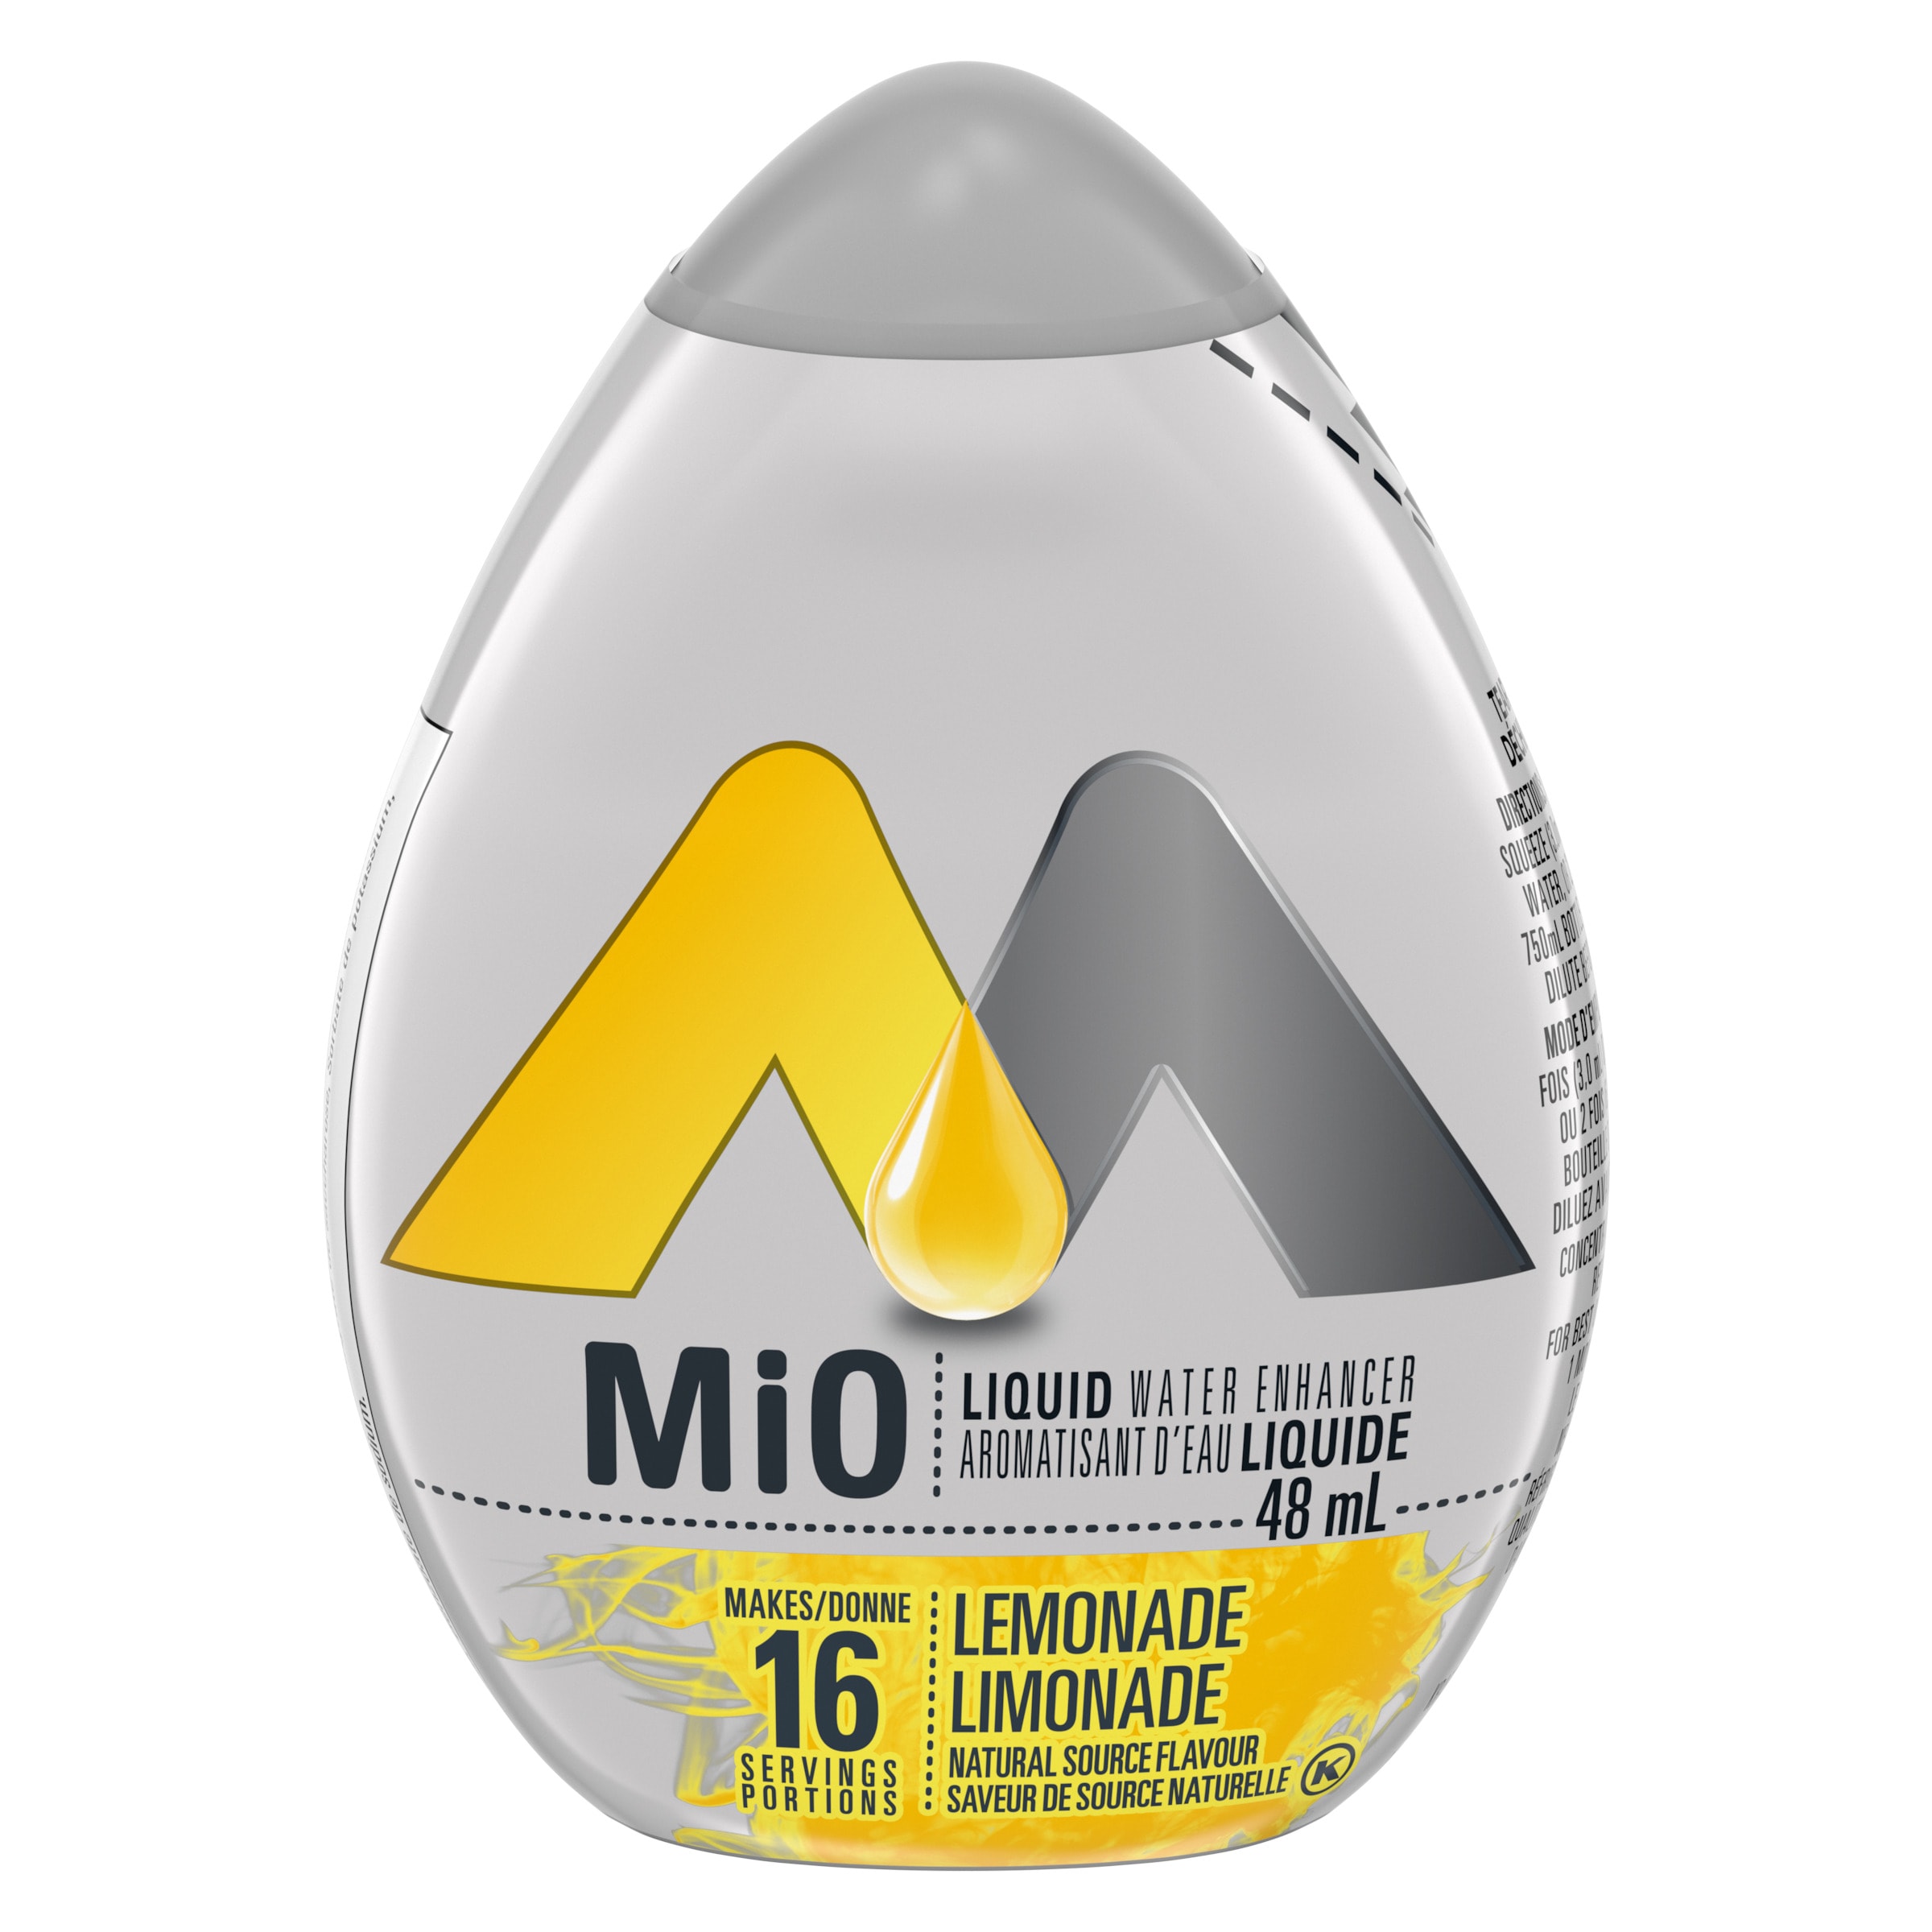 Lemonade Liquid Water Enhancer